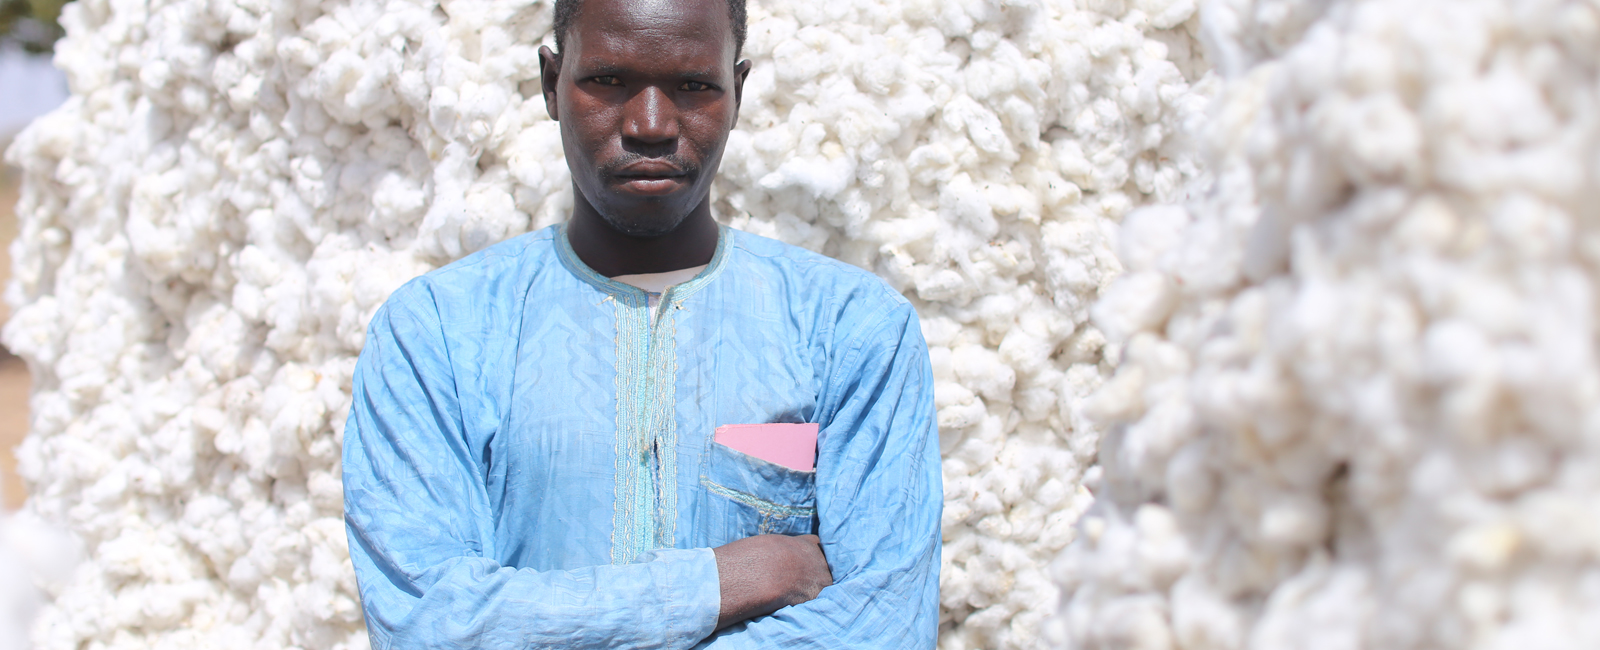 burkina faso cotton farmer